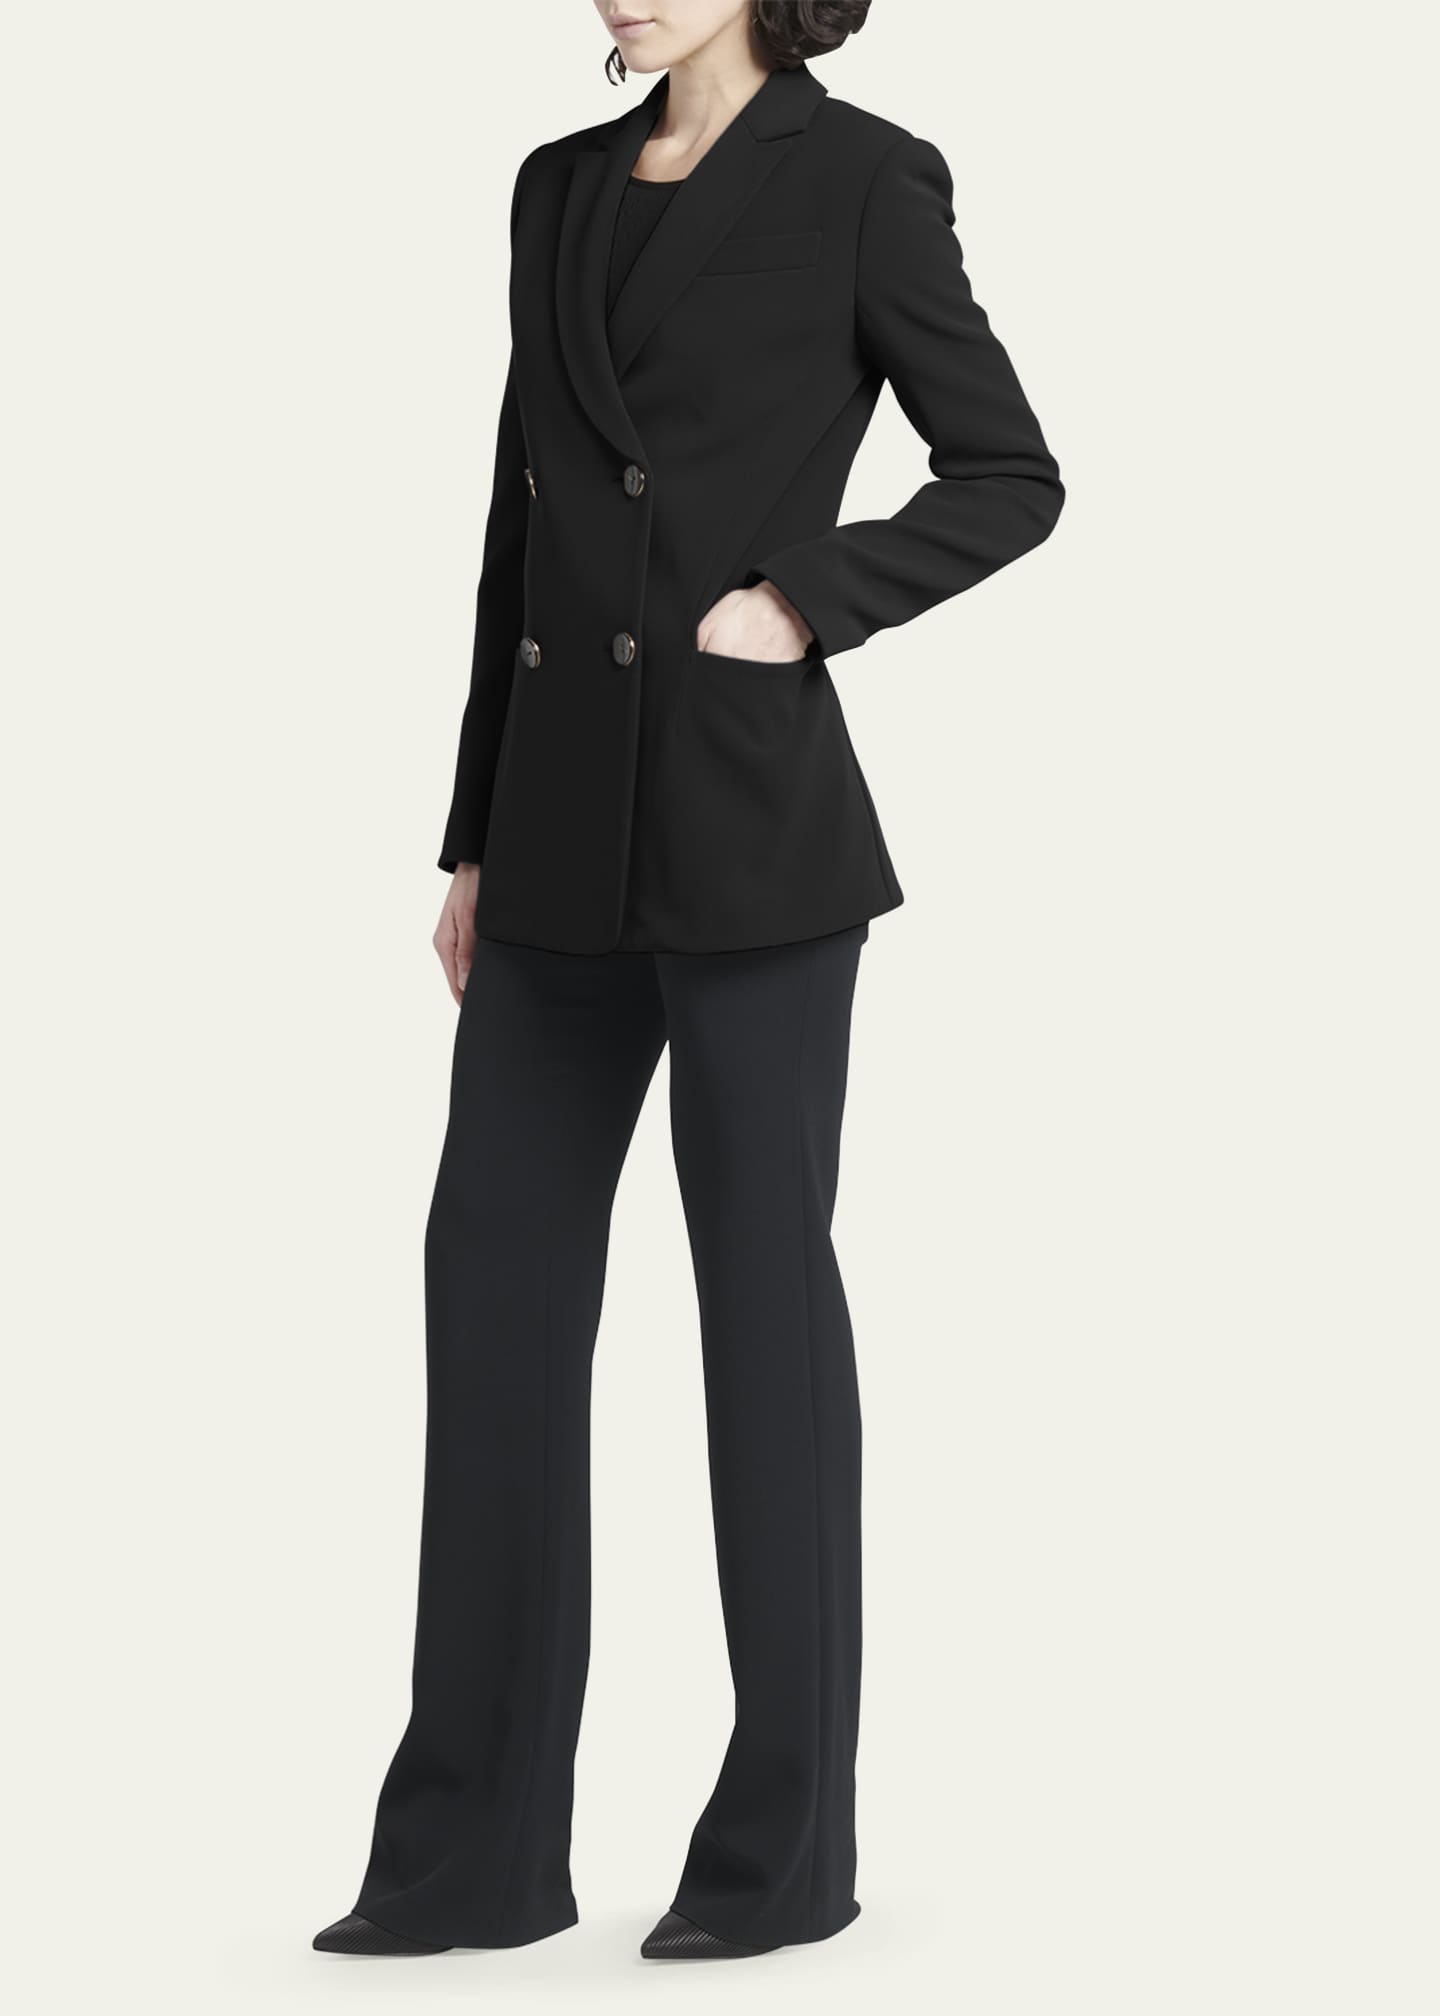 Giorgio Armani Clothing : Jackets & Dresses at Bergdorf Goodman